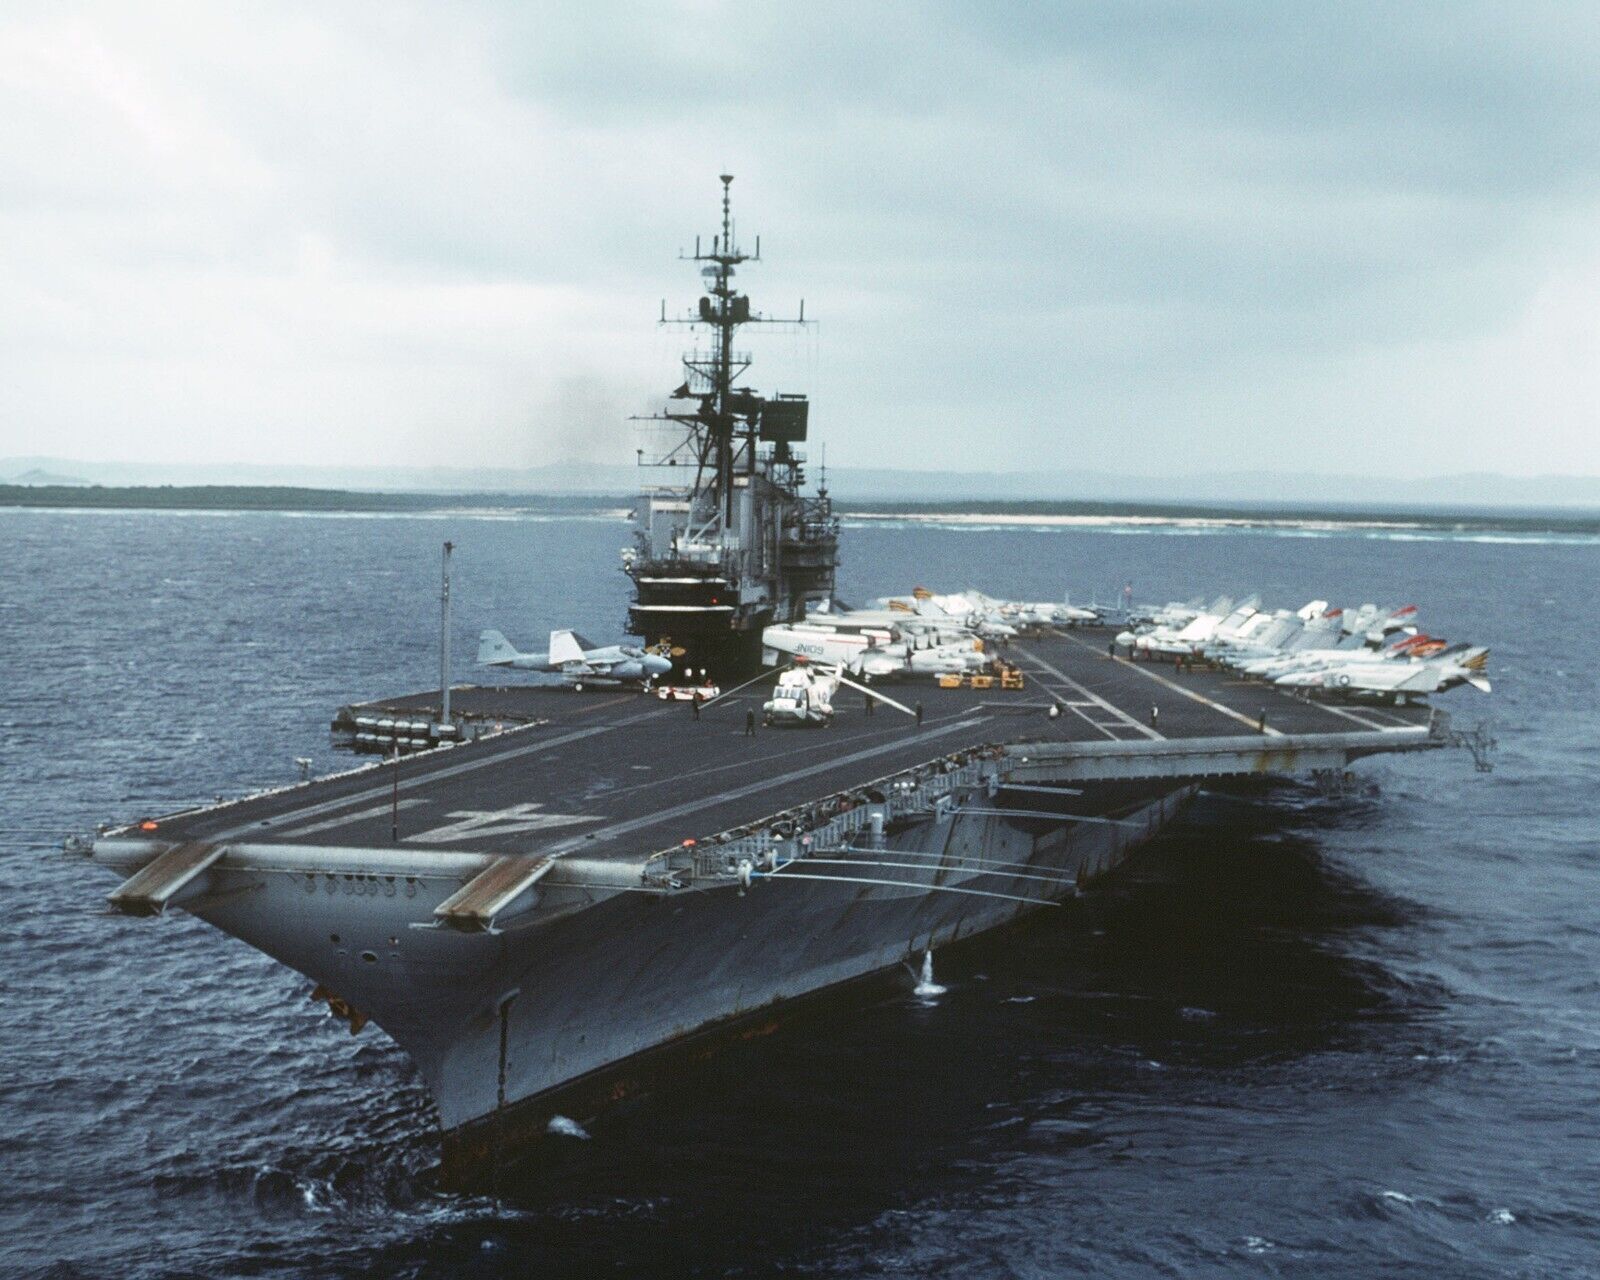 USS MIDWAY (CV-41) AIRCRAFT CARRIER OFFSHORE 8X10 GLOSSY PHOTOGRAPH REPRINT